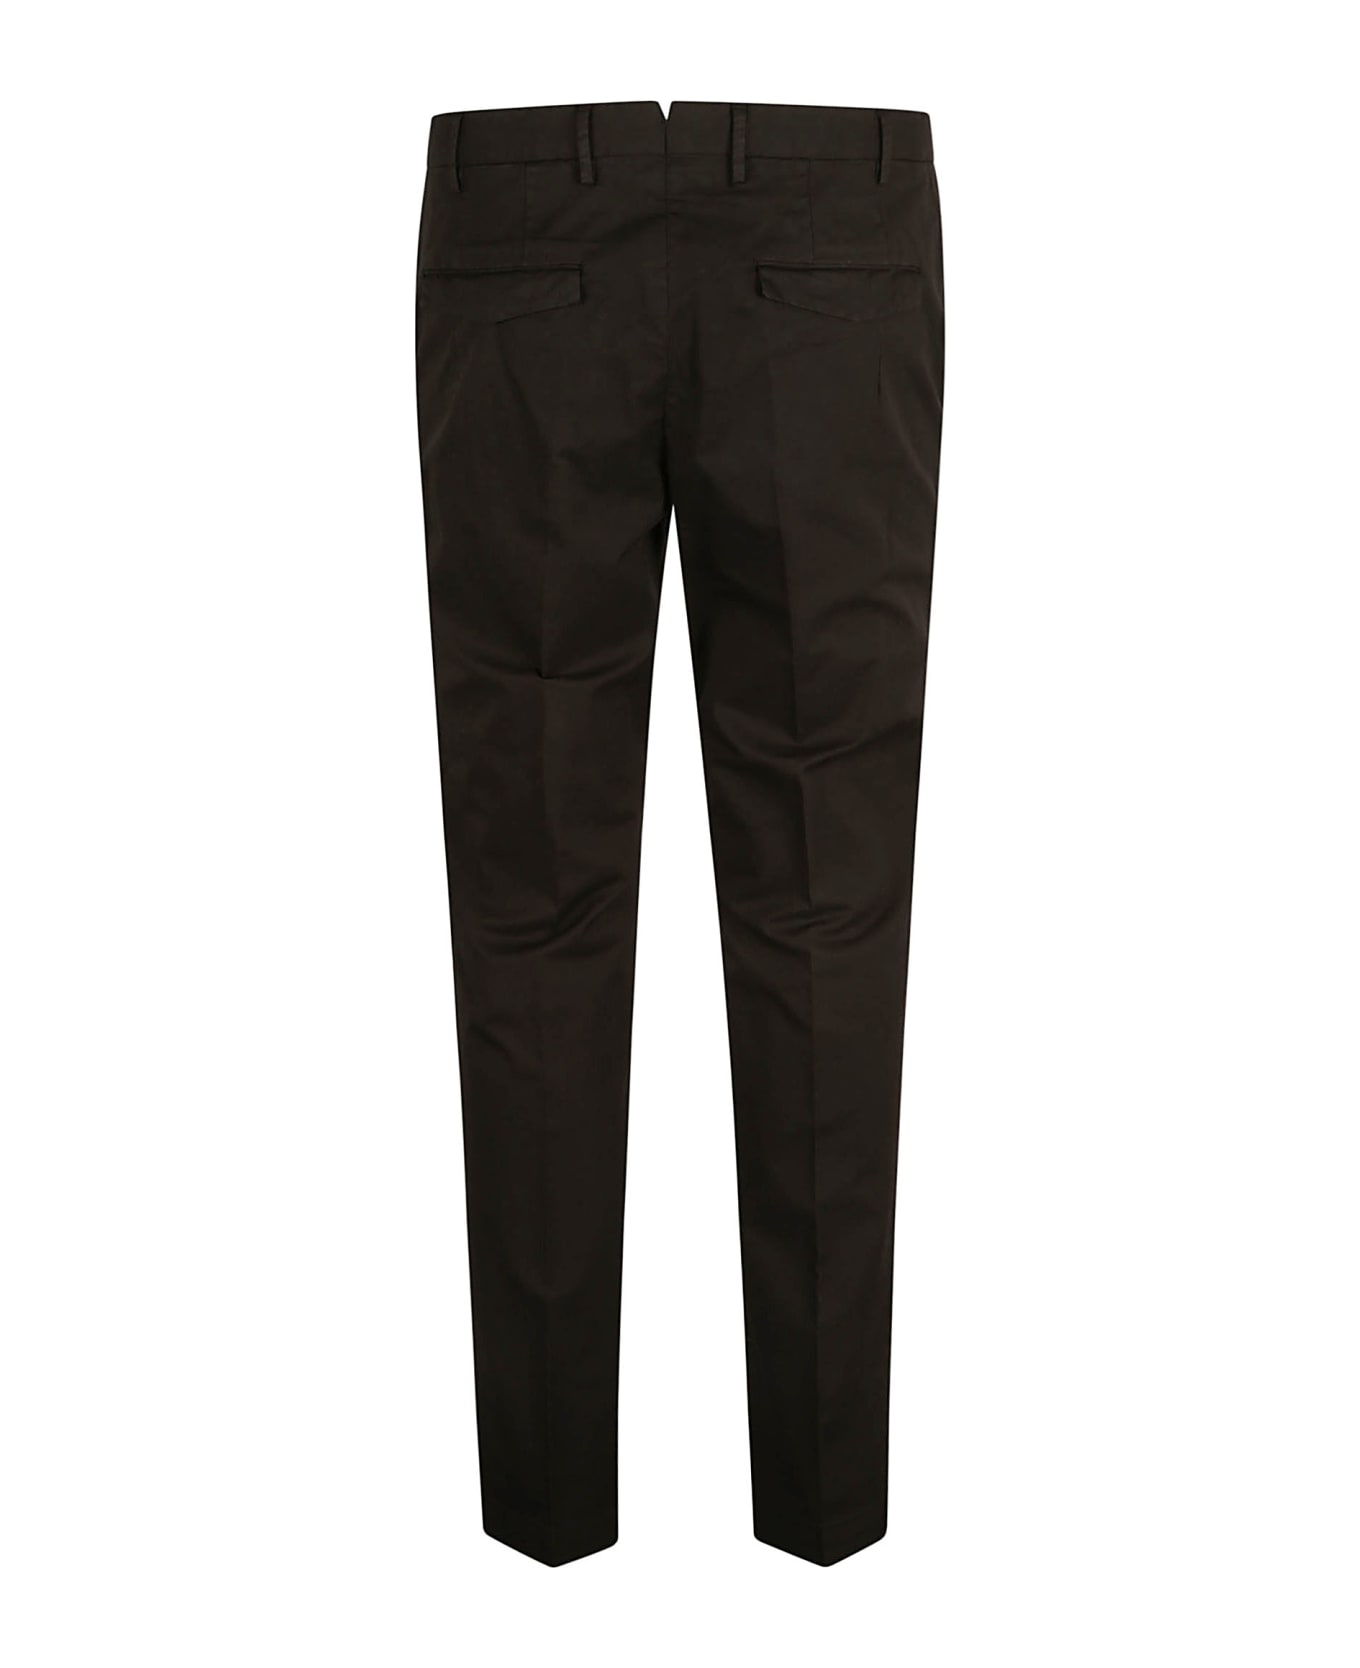 PT Torino Slim Fit Plain Trousers - Black ボトムス